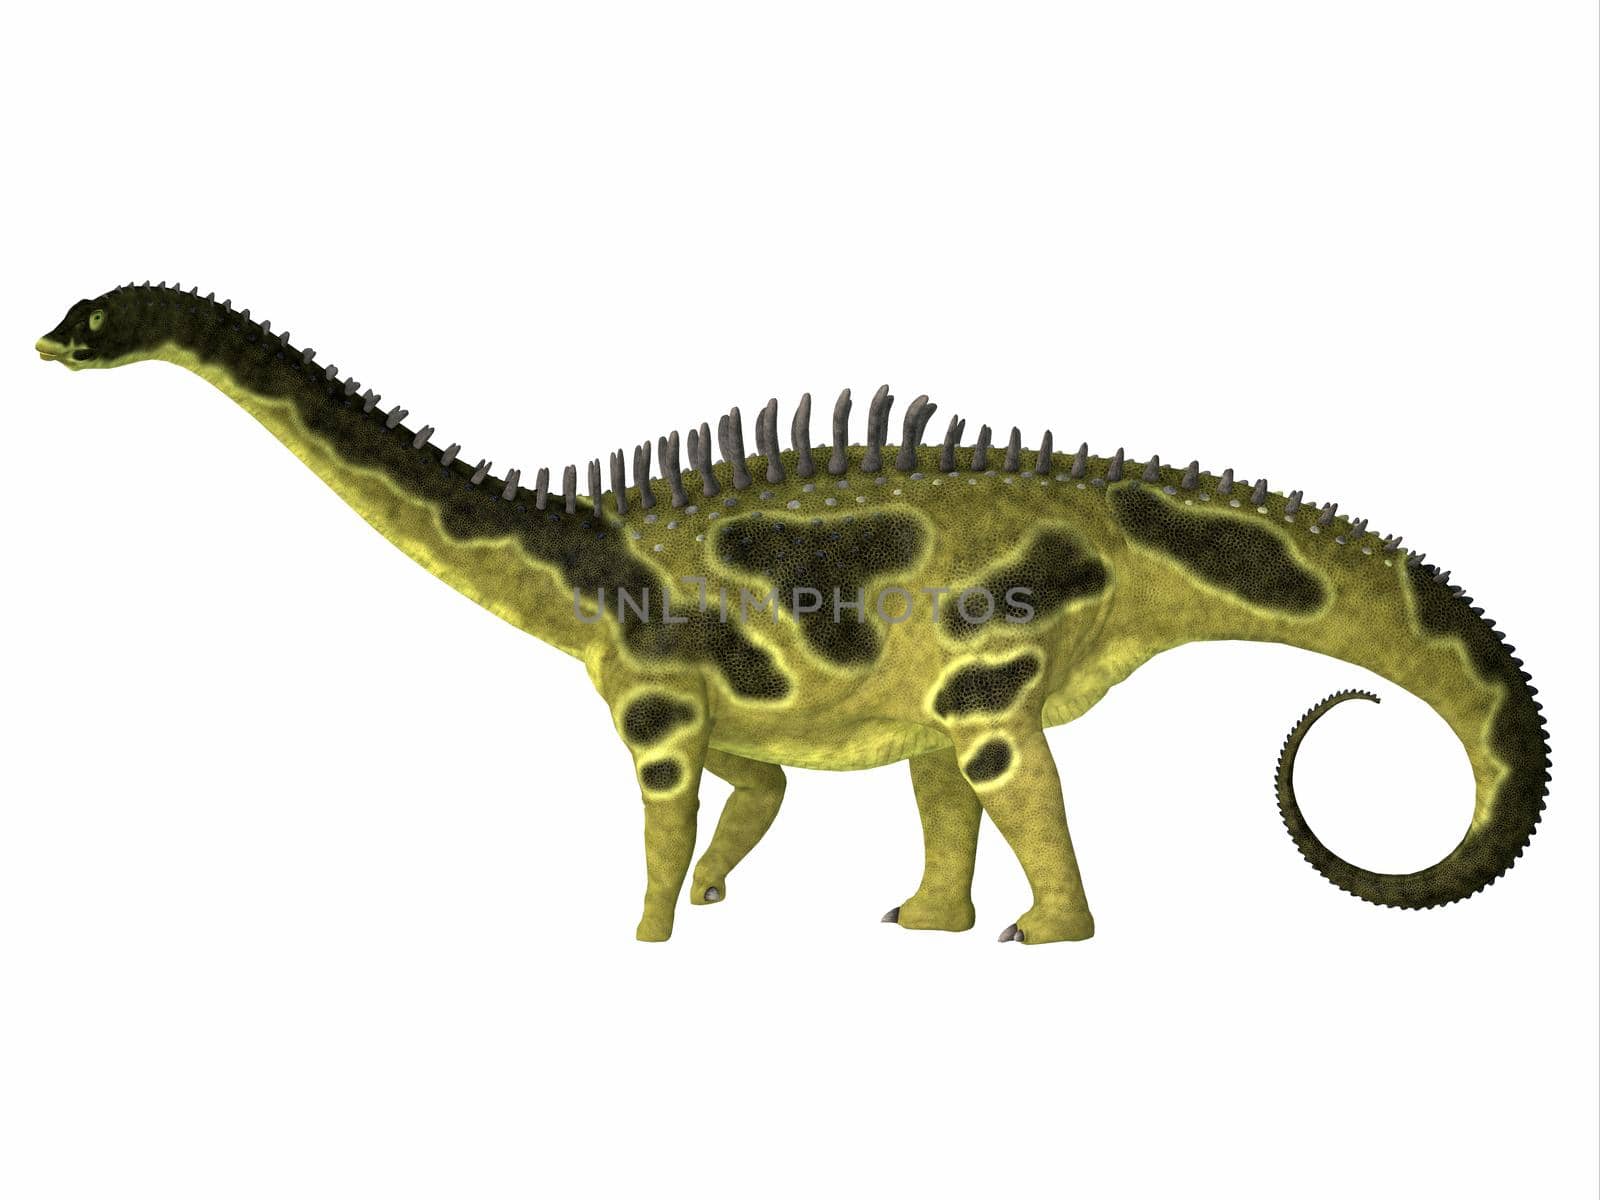 Agustinia Dinosaur Side Profile by Catmando